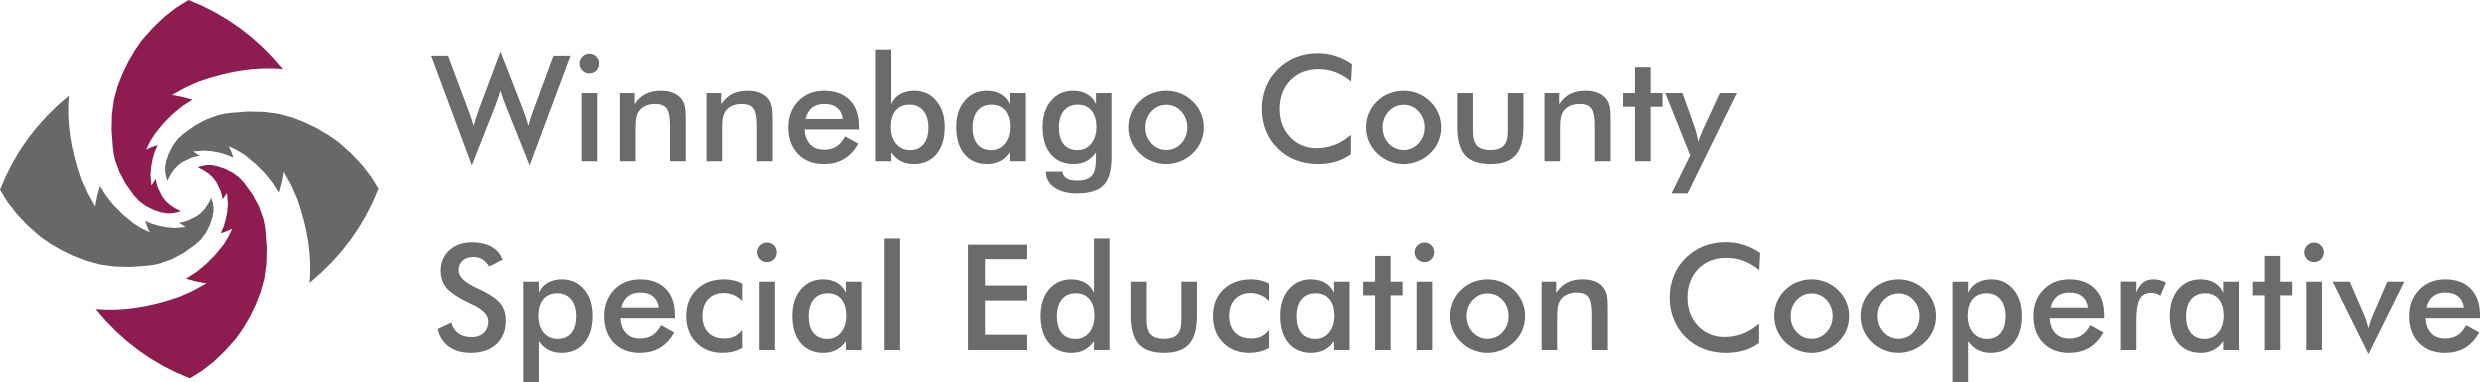 Winnebago County Special Education Cooperative